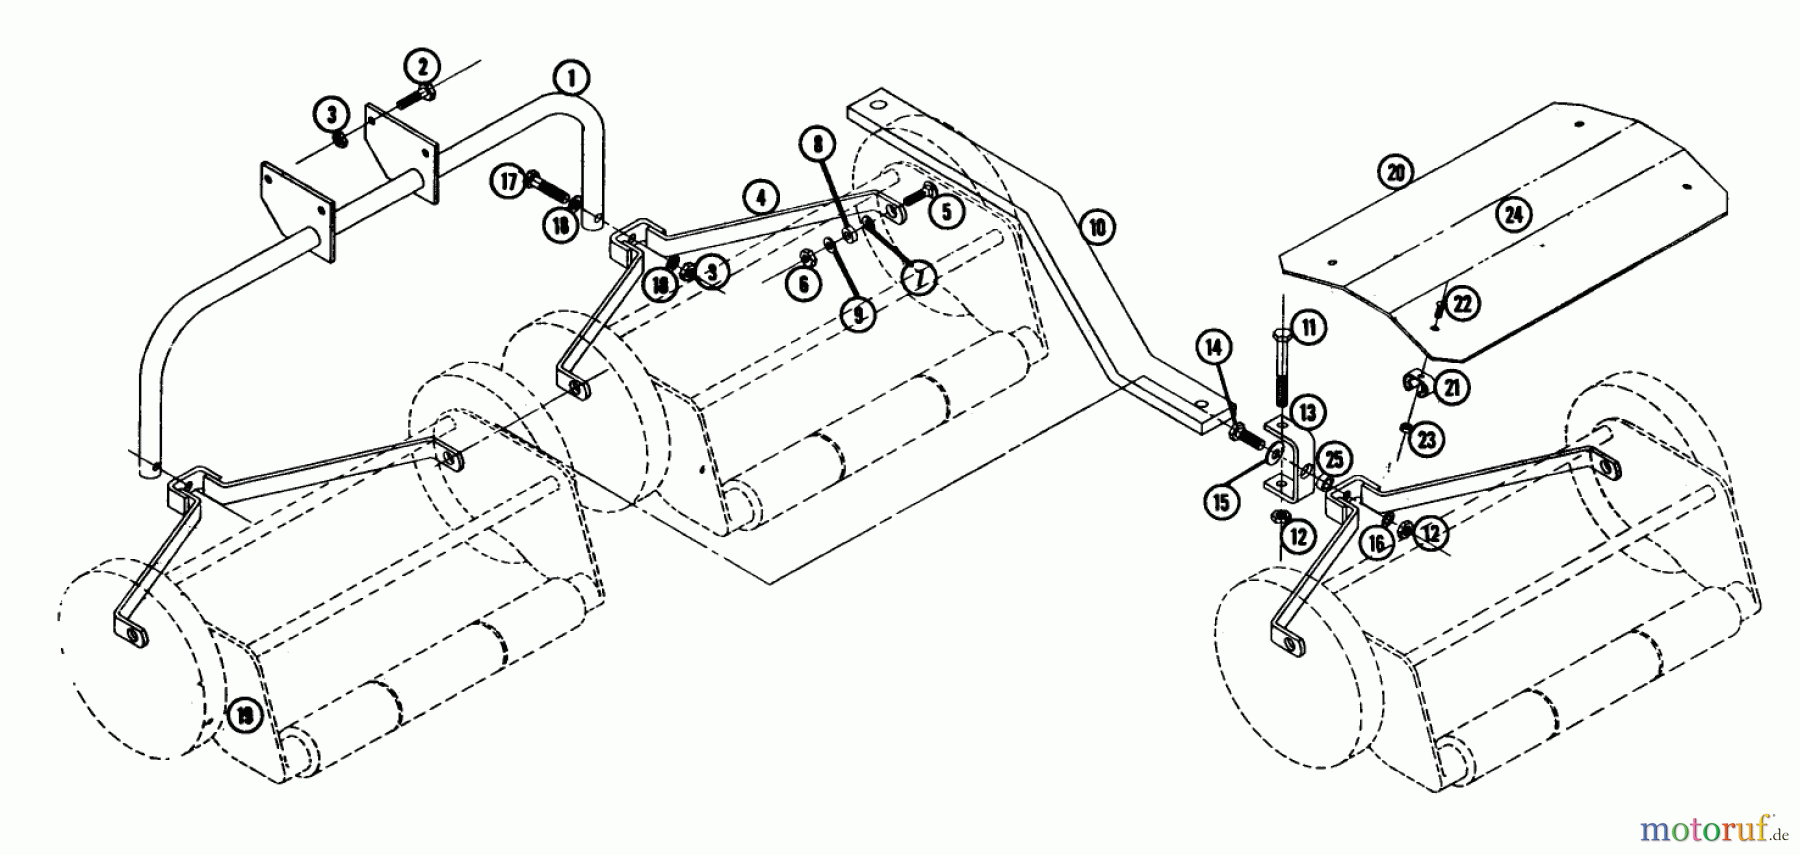  Toro Neu Mowers, Deck Assembly Only SGM-603 - Toro 3 Gang Reel Mower, 1965 GANG MOWER PARTS LIST